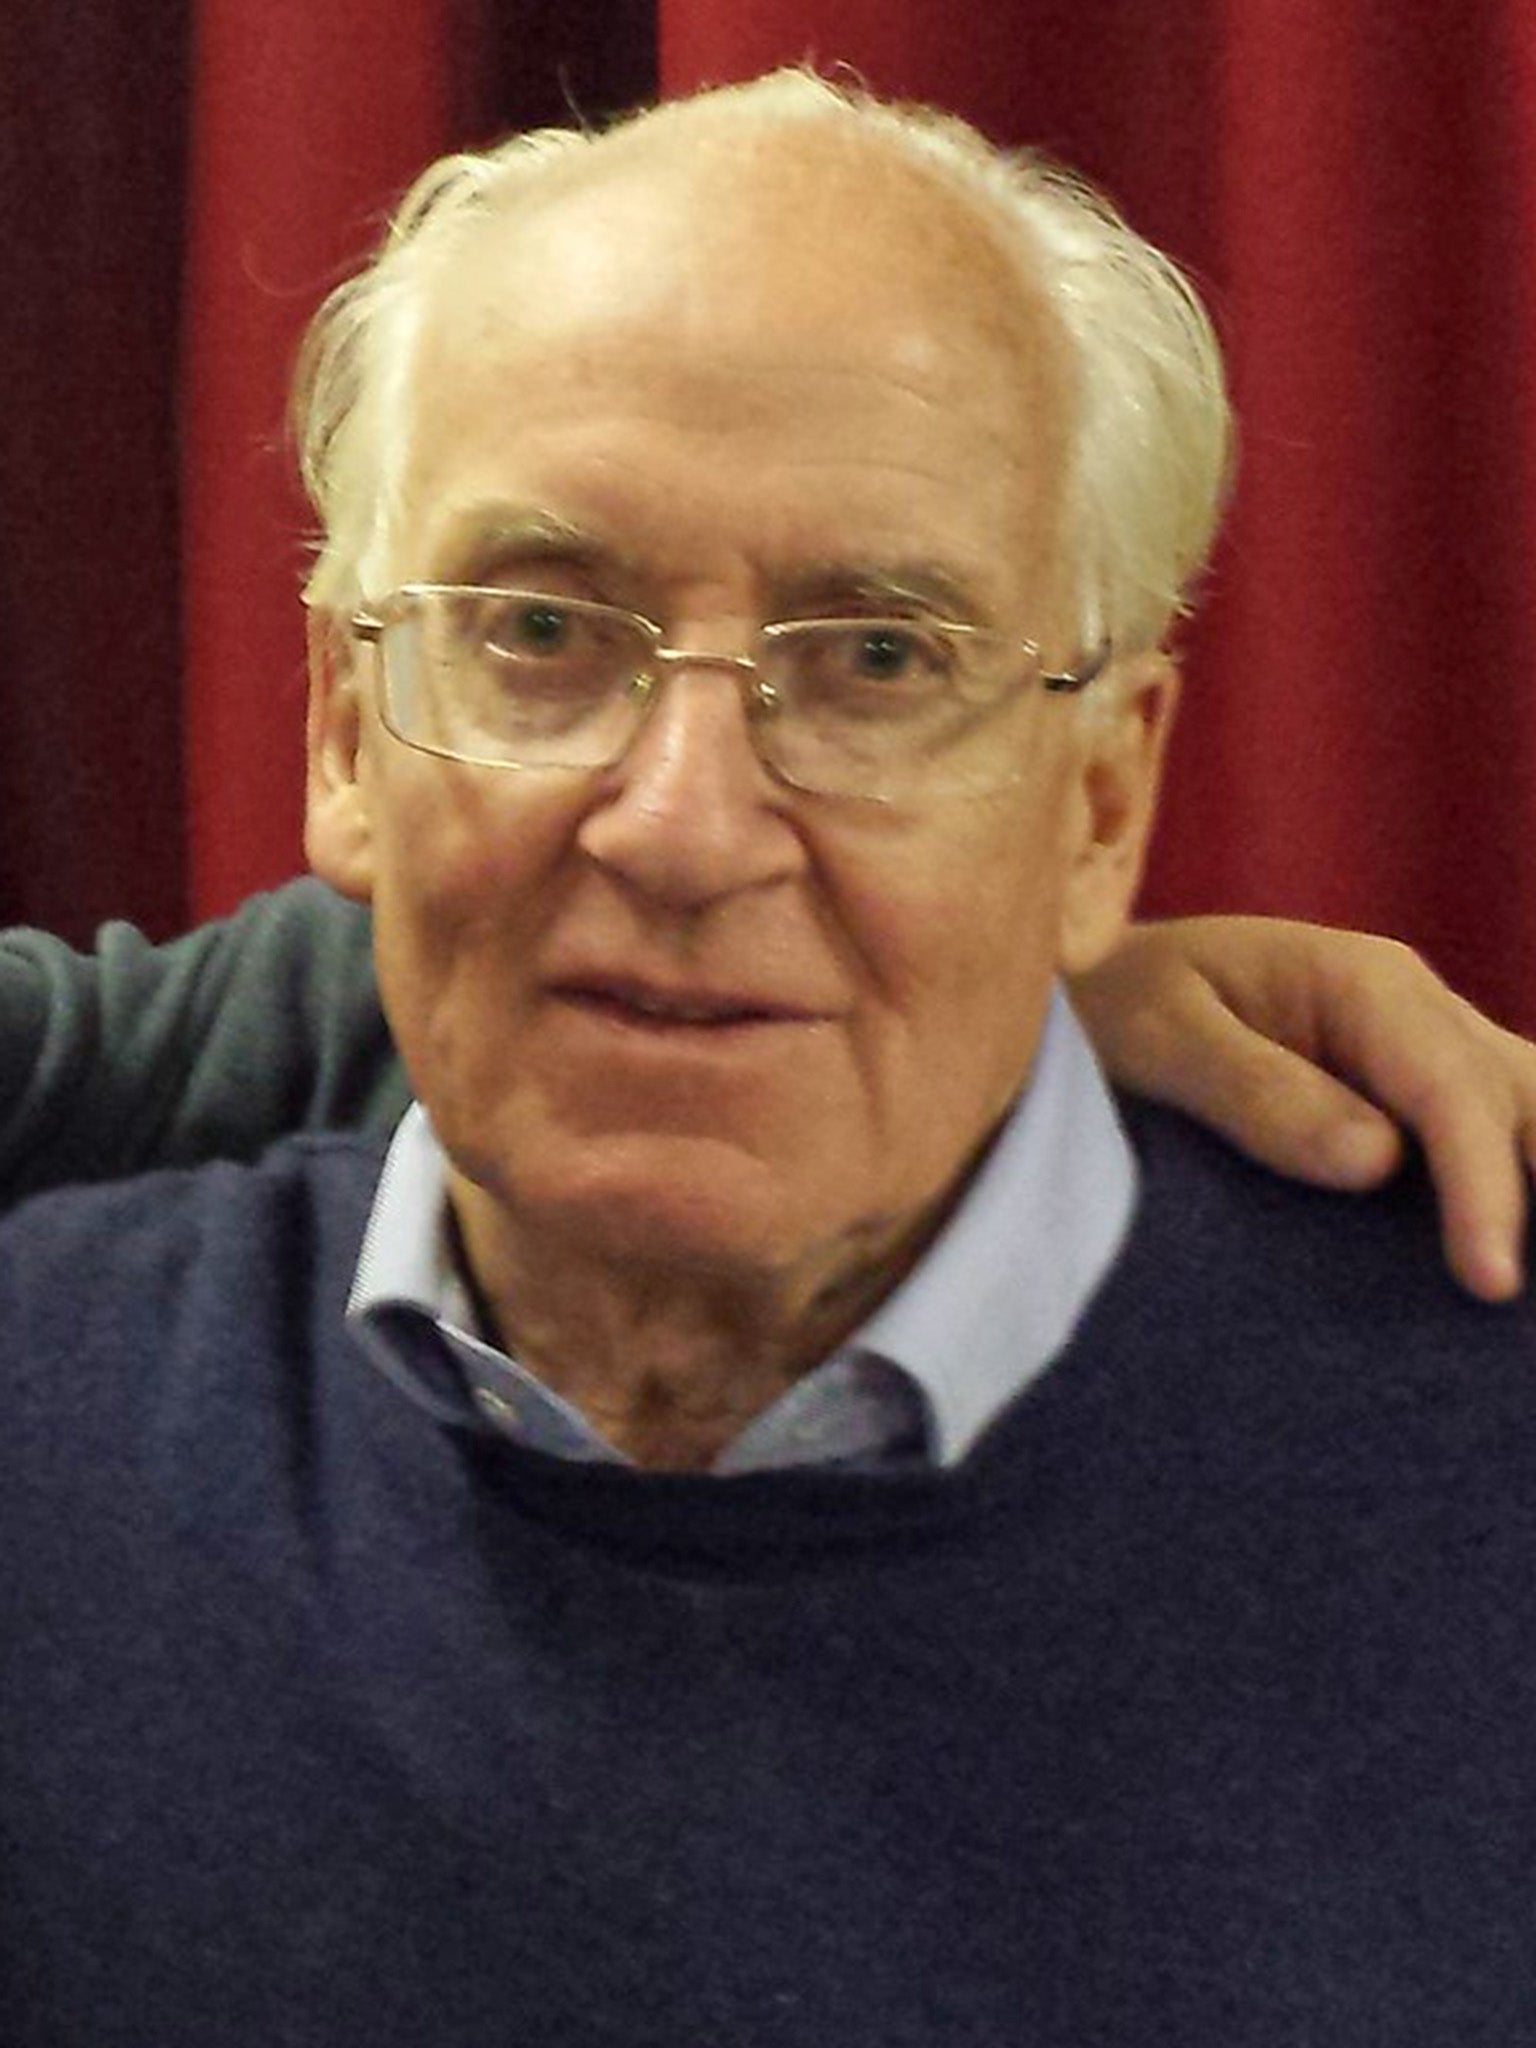 Doug Scott pictured in 2015